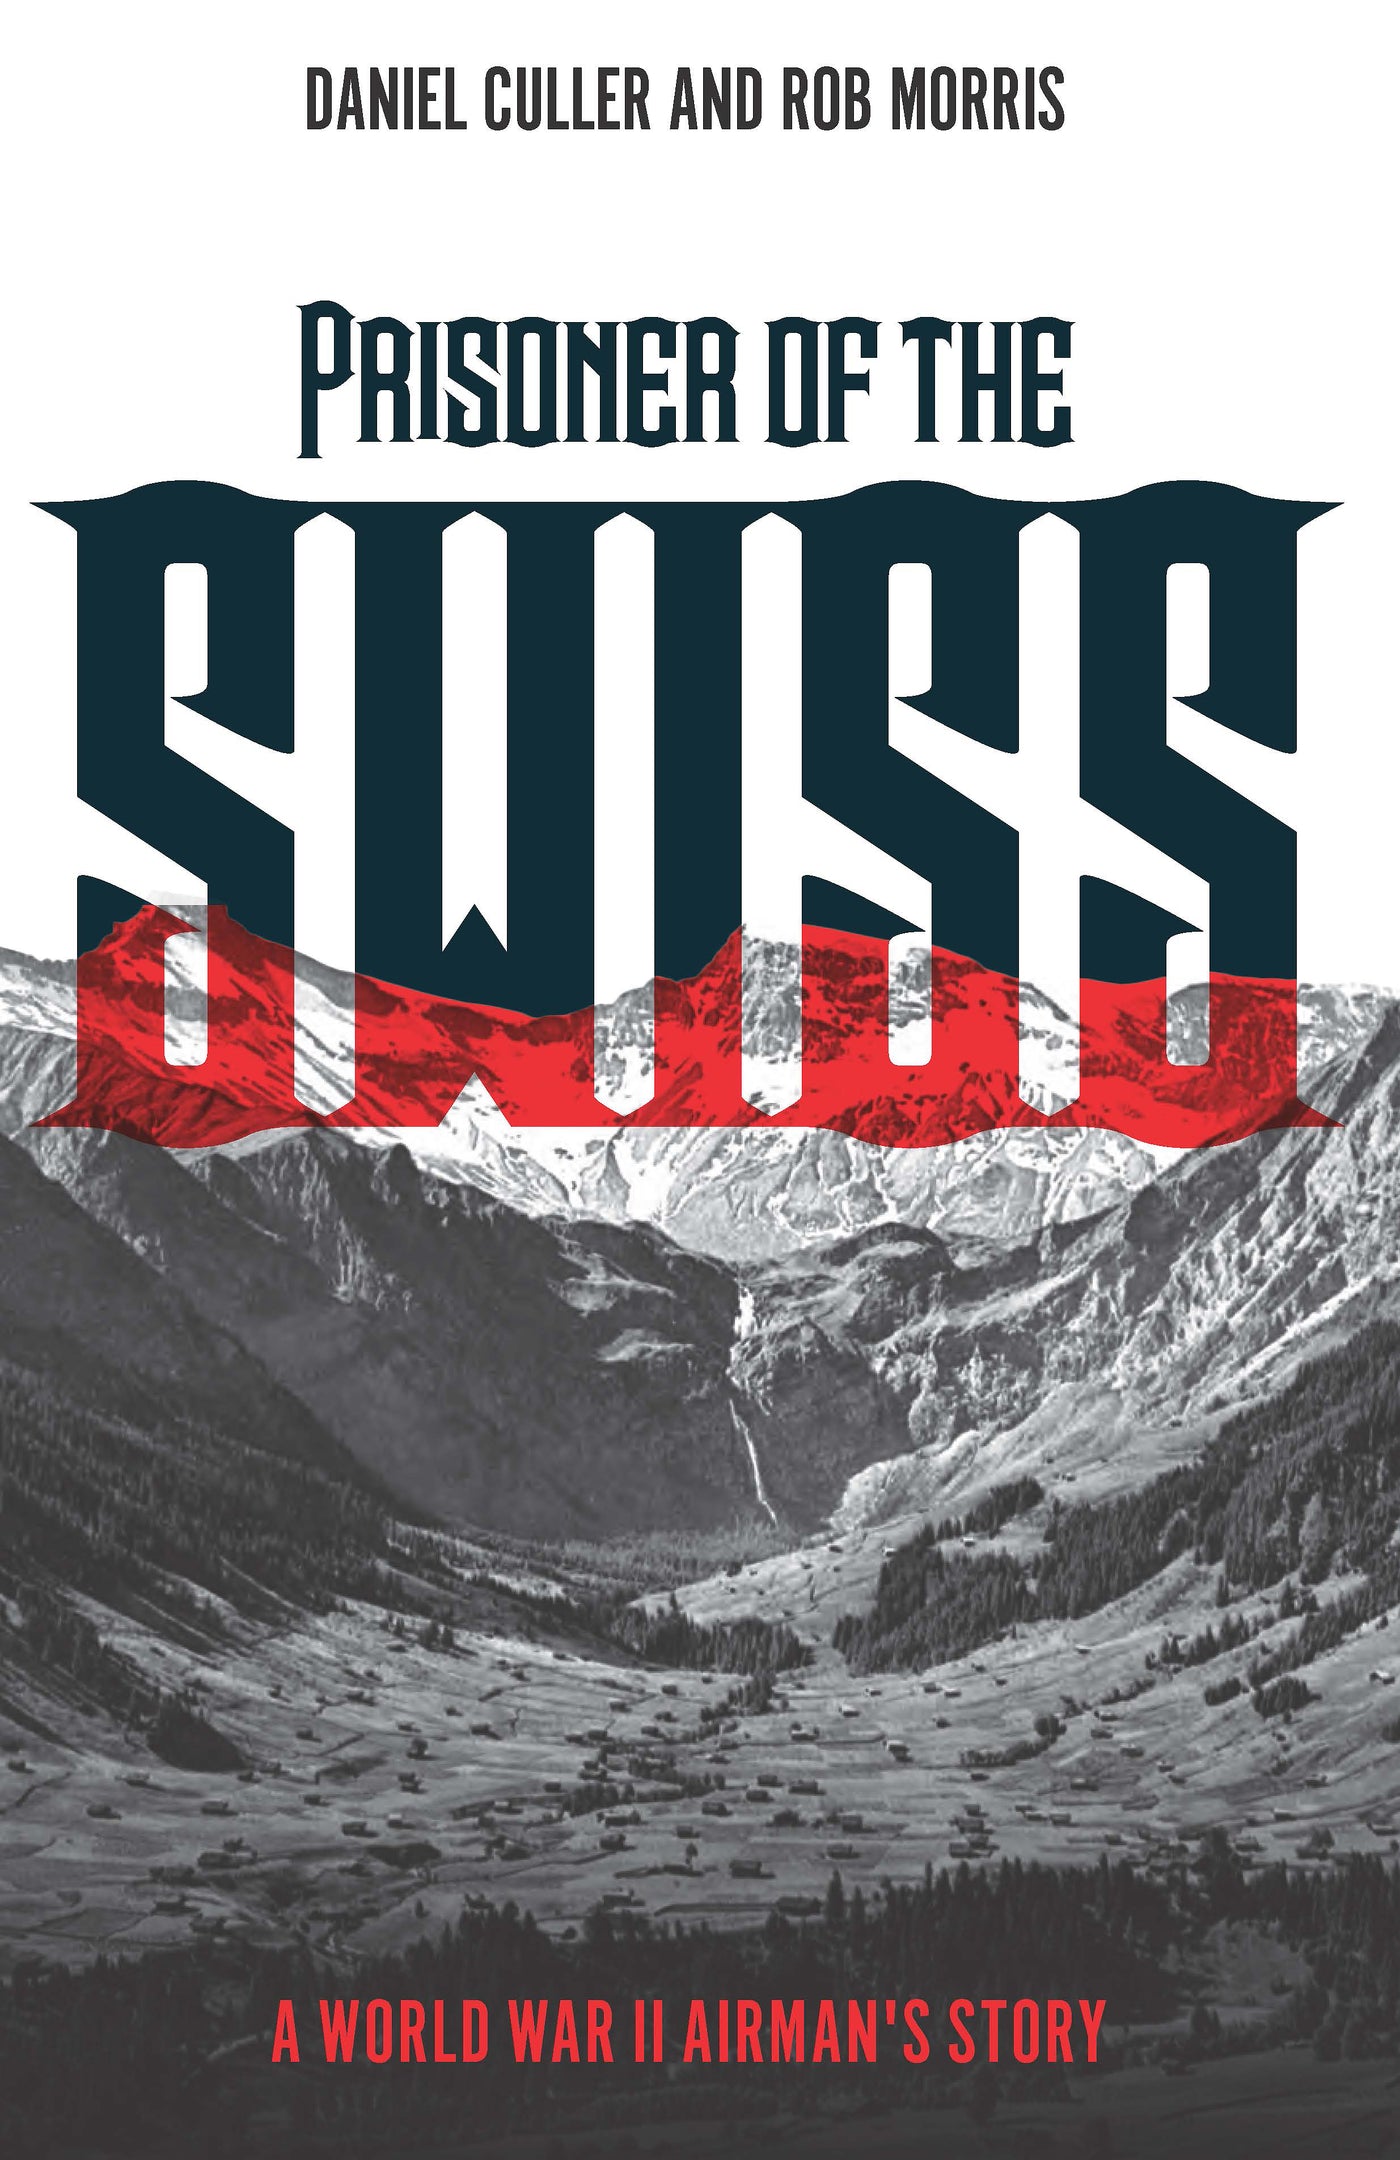 Prisoner of the Swiss